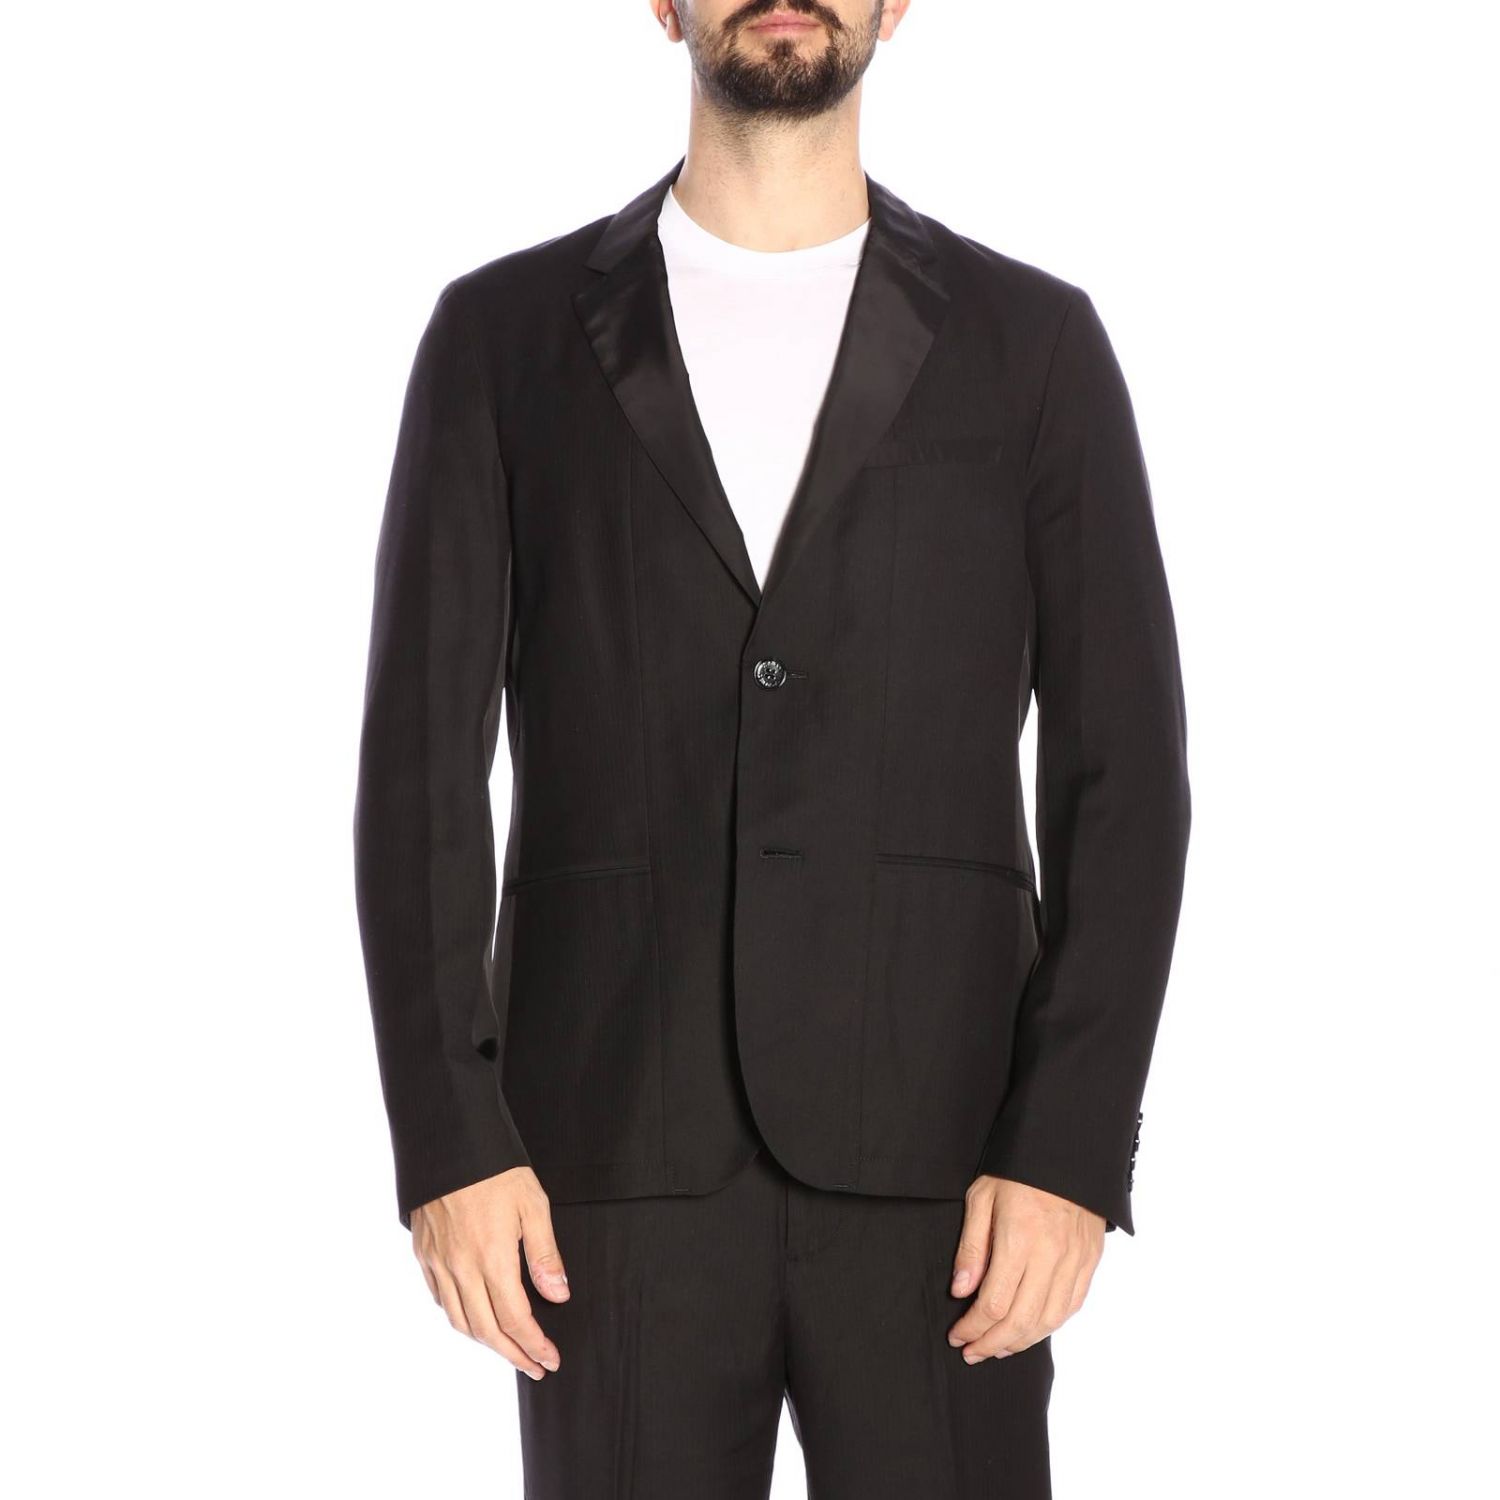 Armani Exchange Outlet: blazer for man - Black | Armani Exchange blazer ...